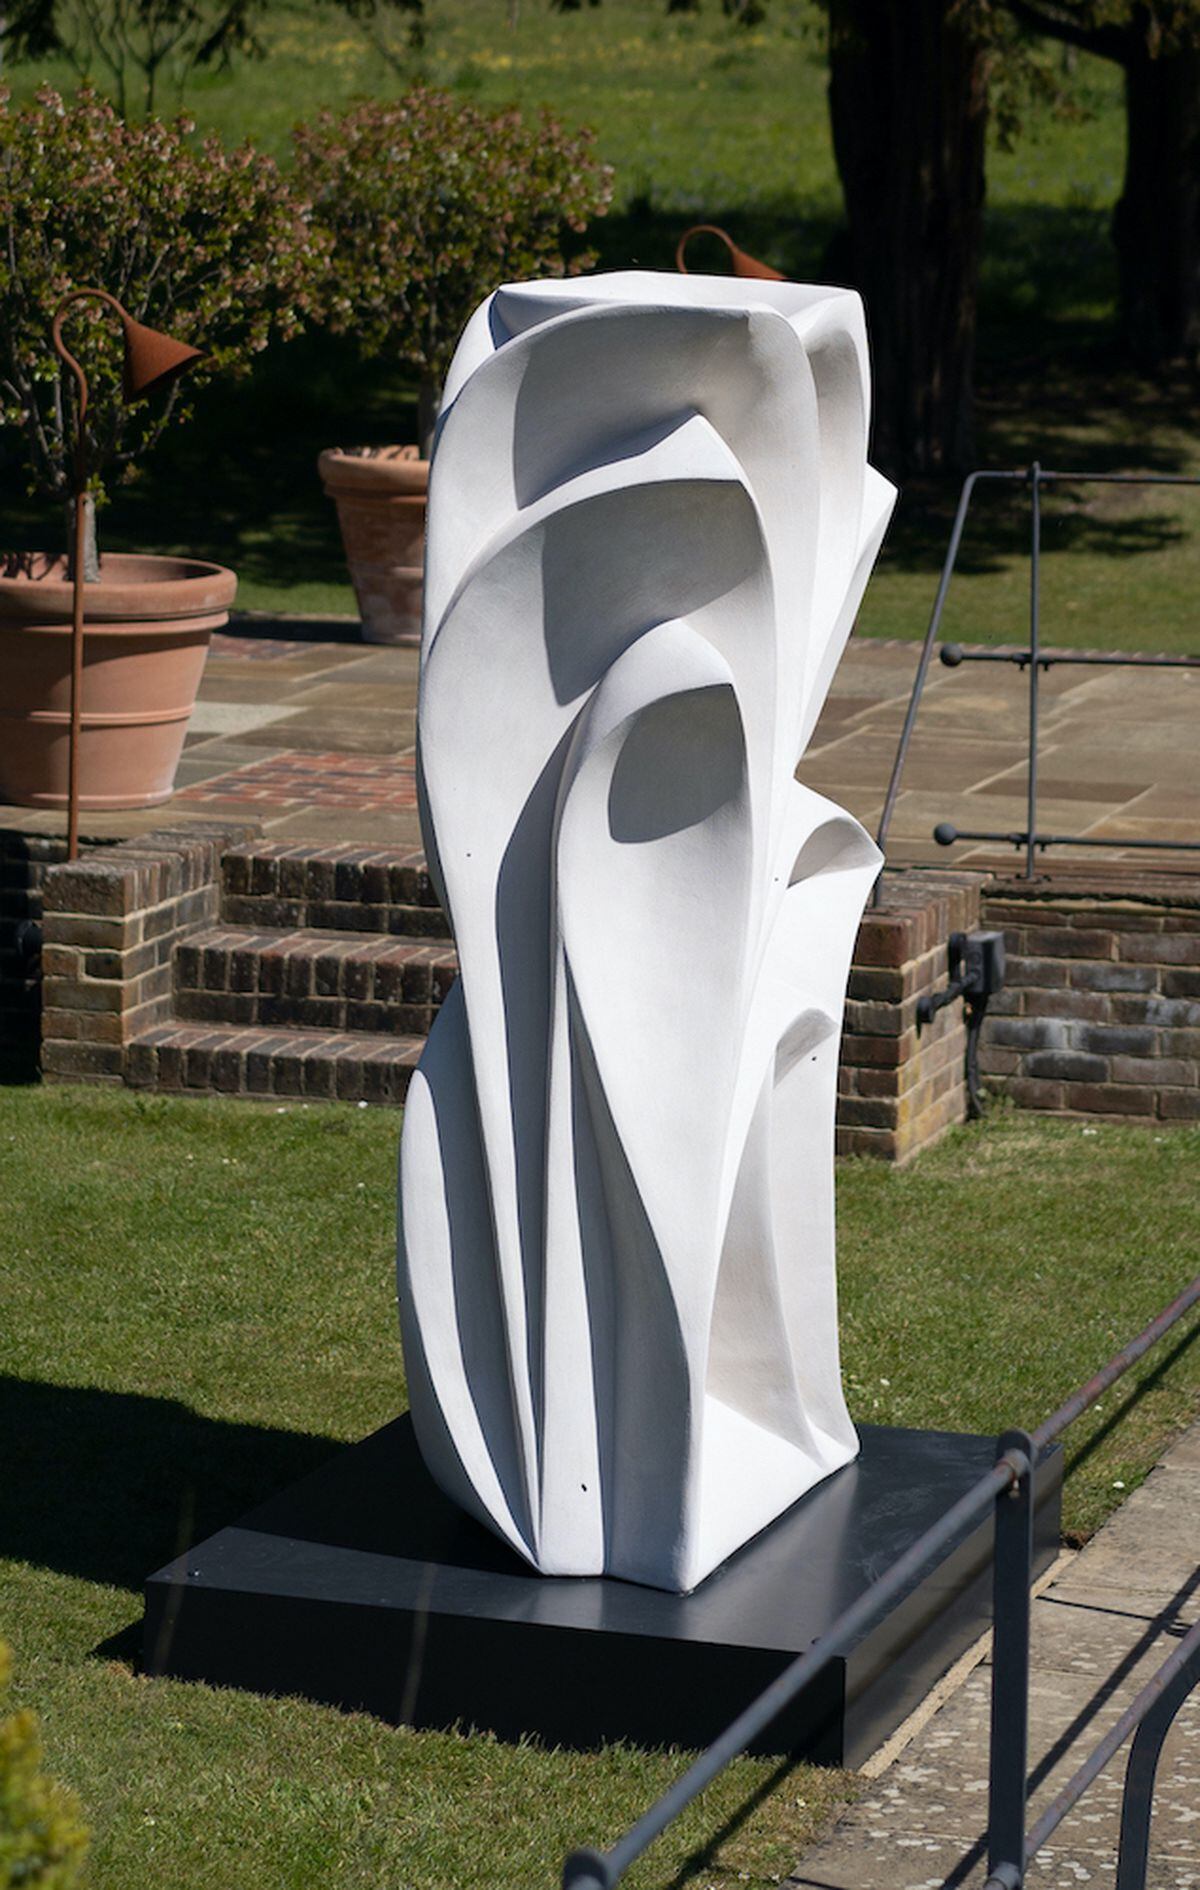 Halima's sculpture Hurricane